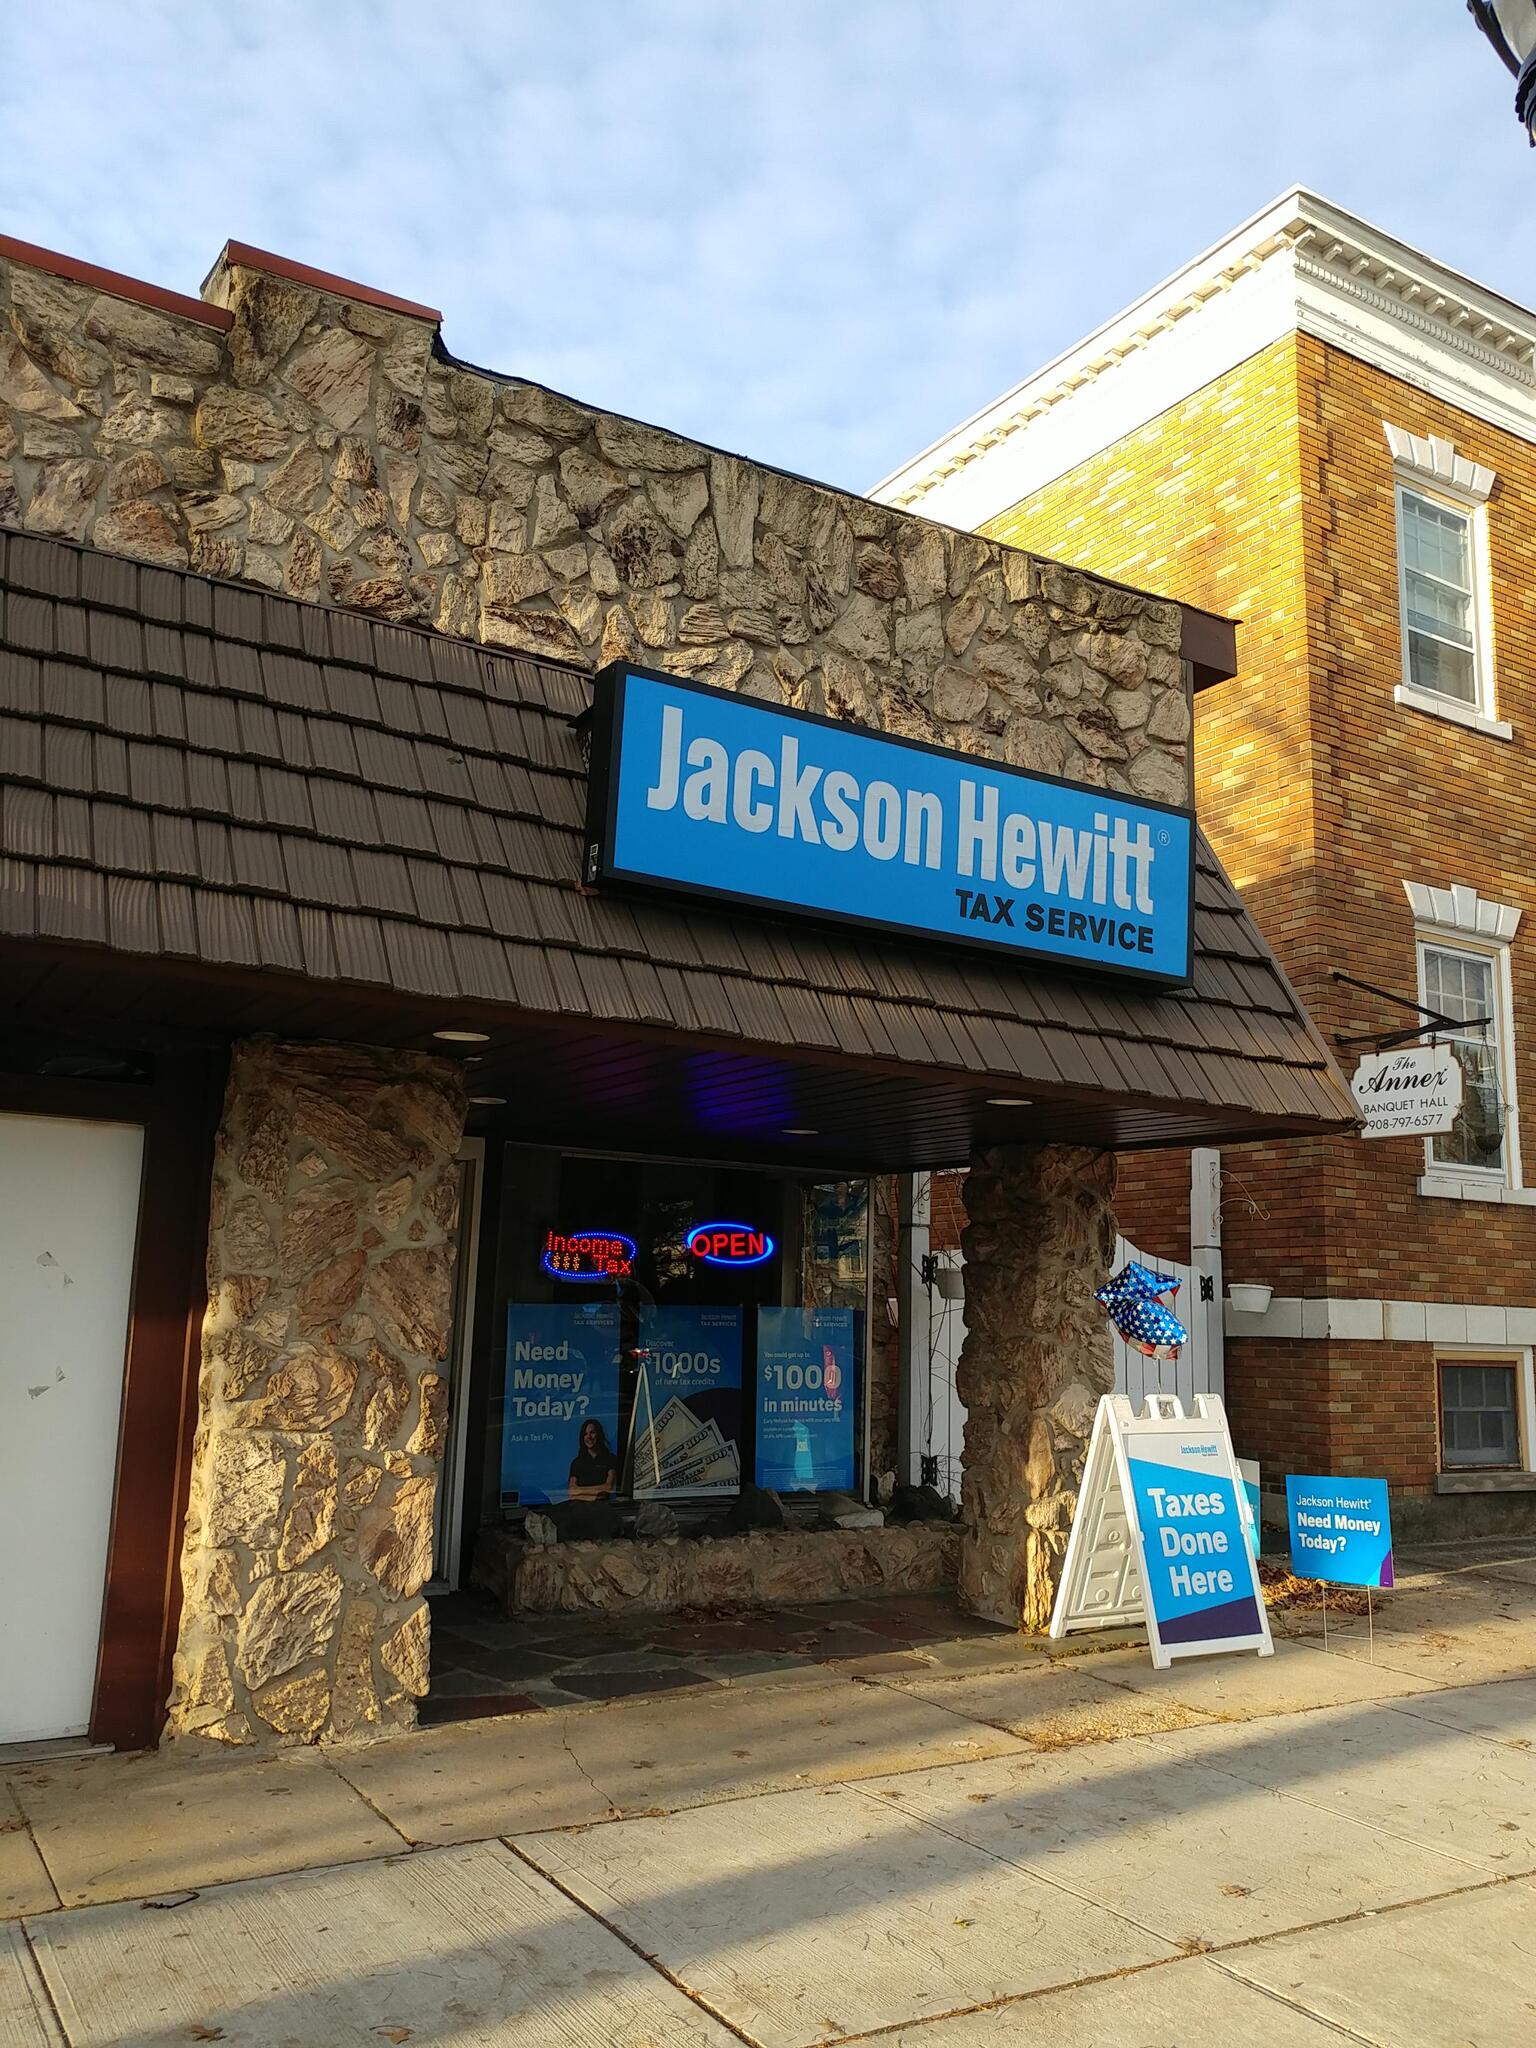 Jackson Hewitt Tax Service 129 N Washington Ave, Dunellen New Jersey 08812